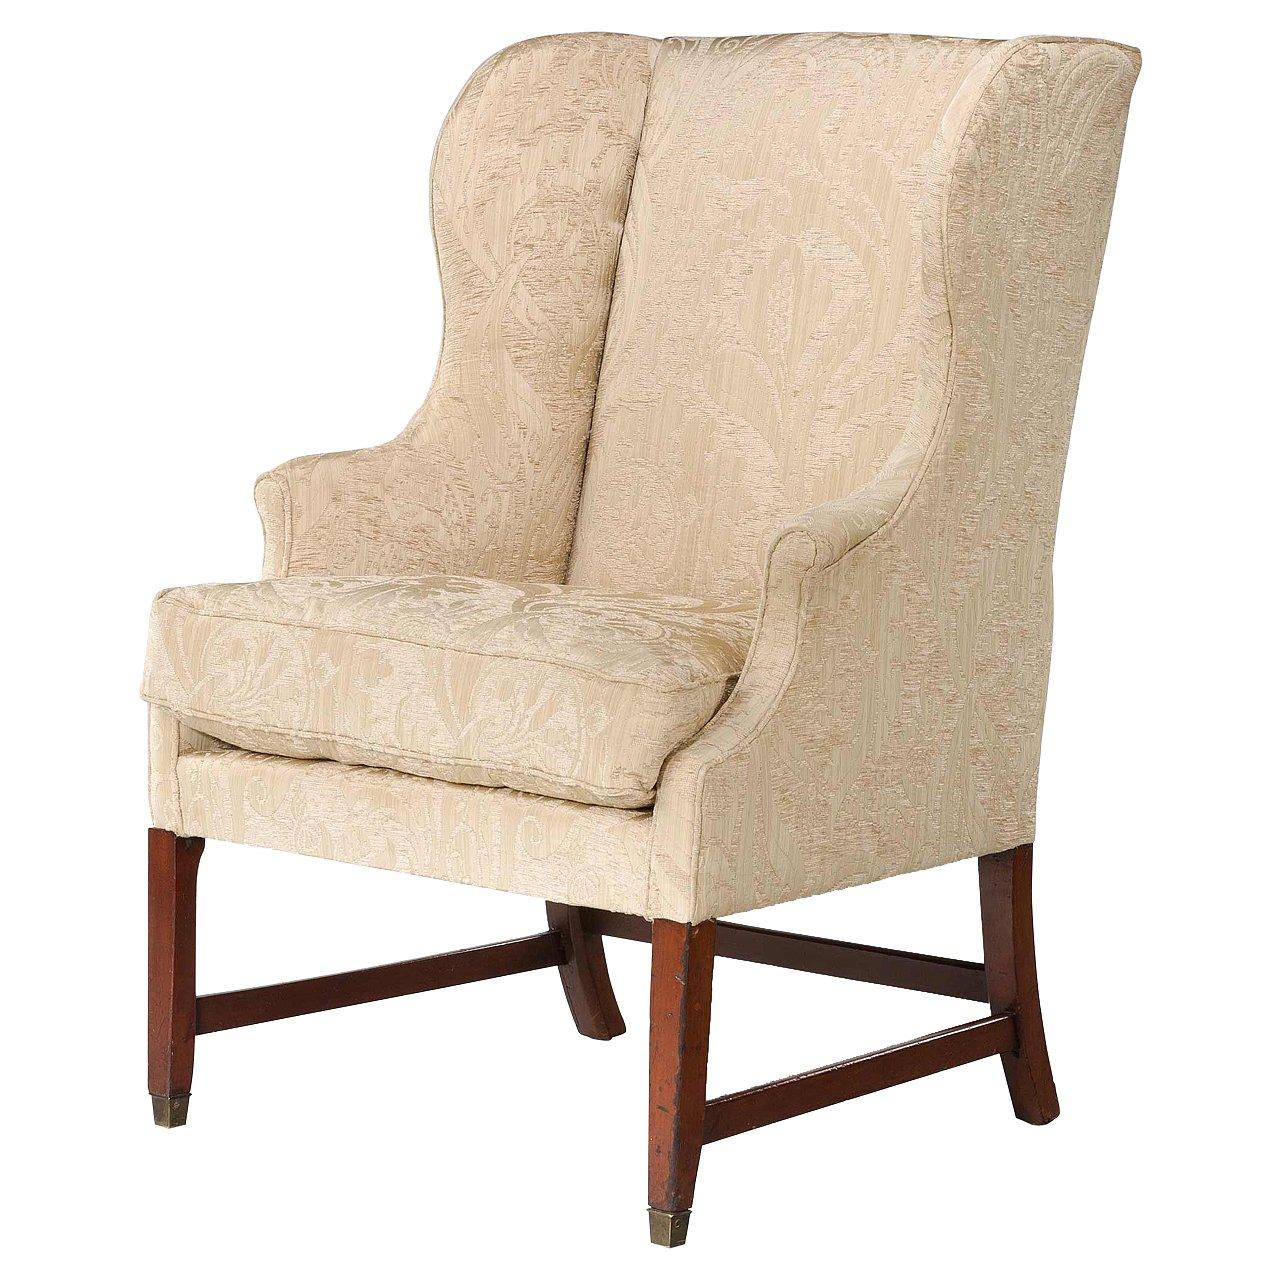 George III Period Wing Chair